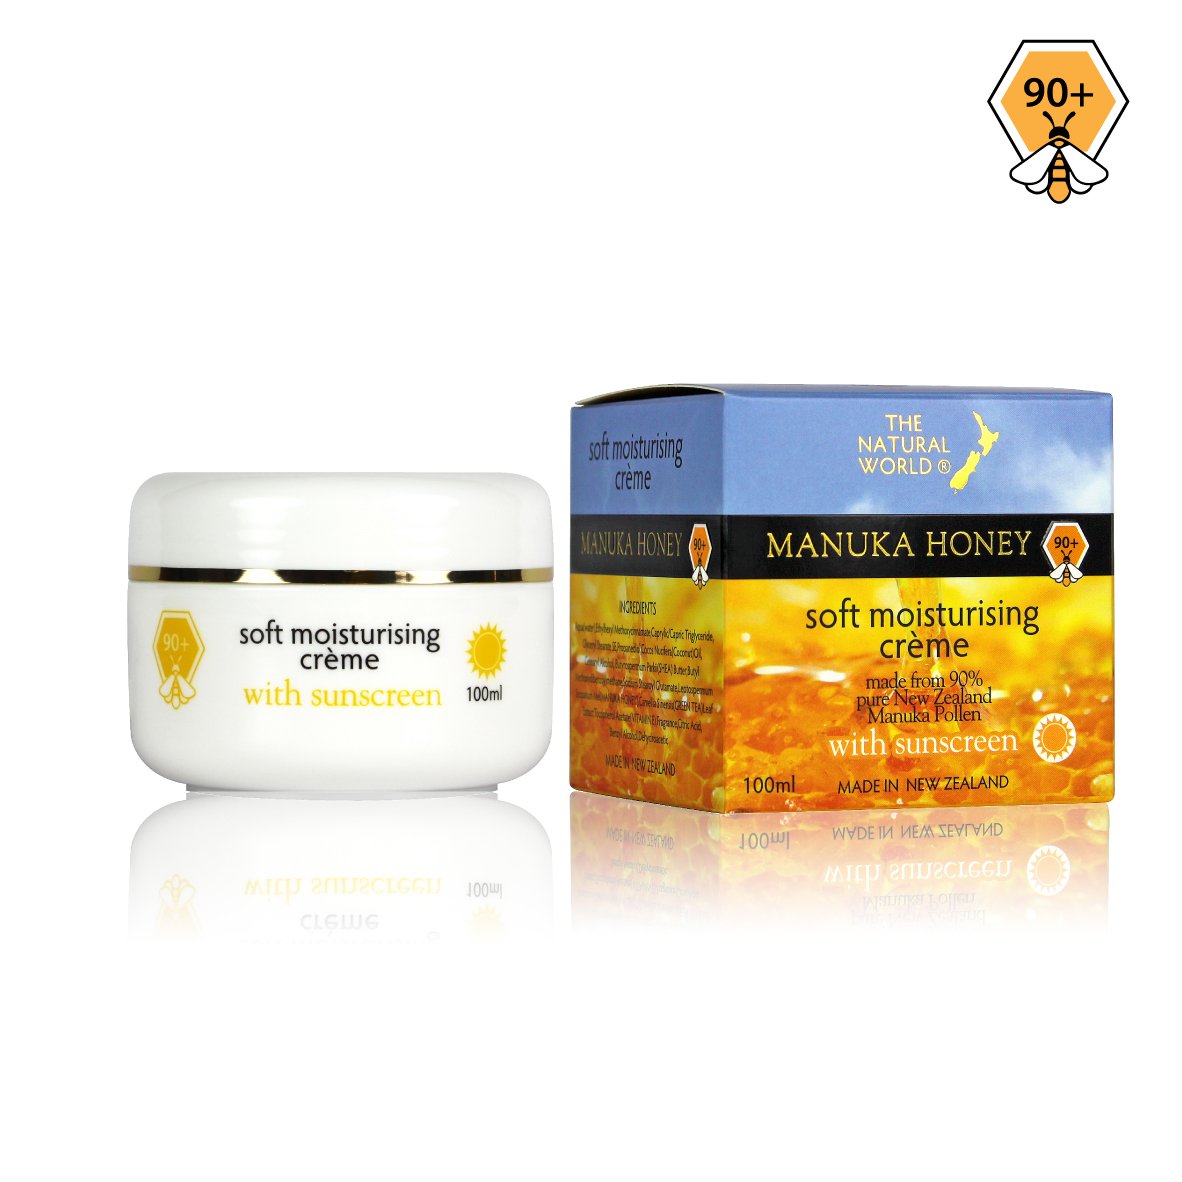 The Natural World Manuka Honey Moisturising Facial Creme with Sunscreen 100ml